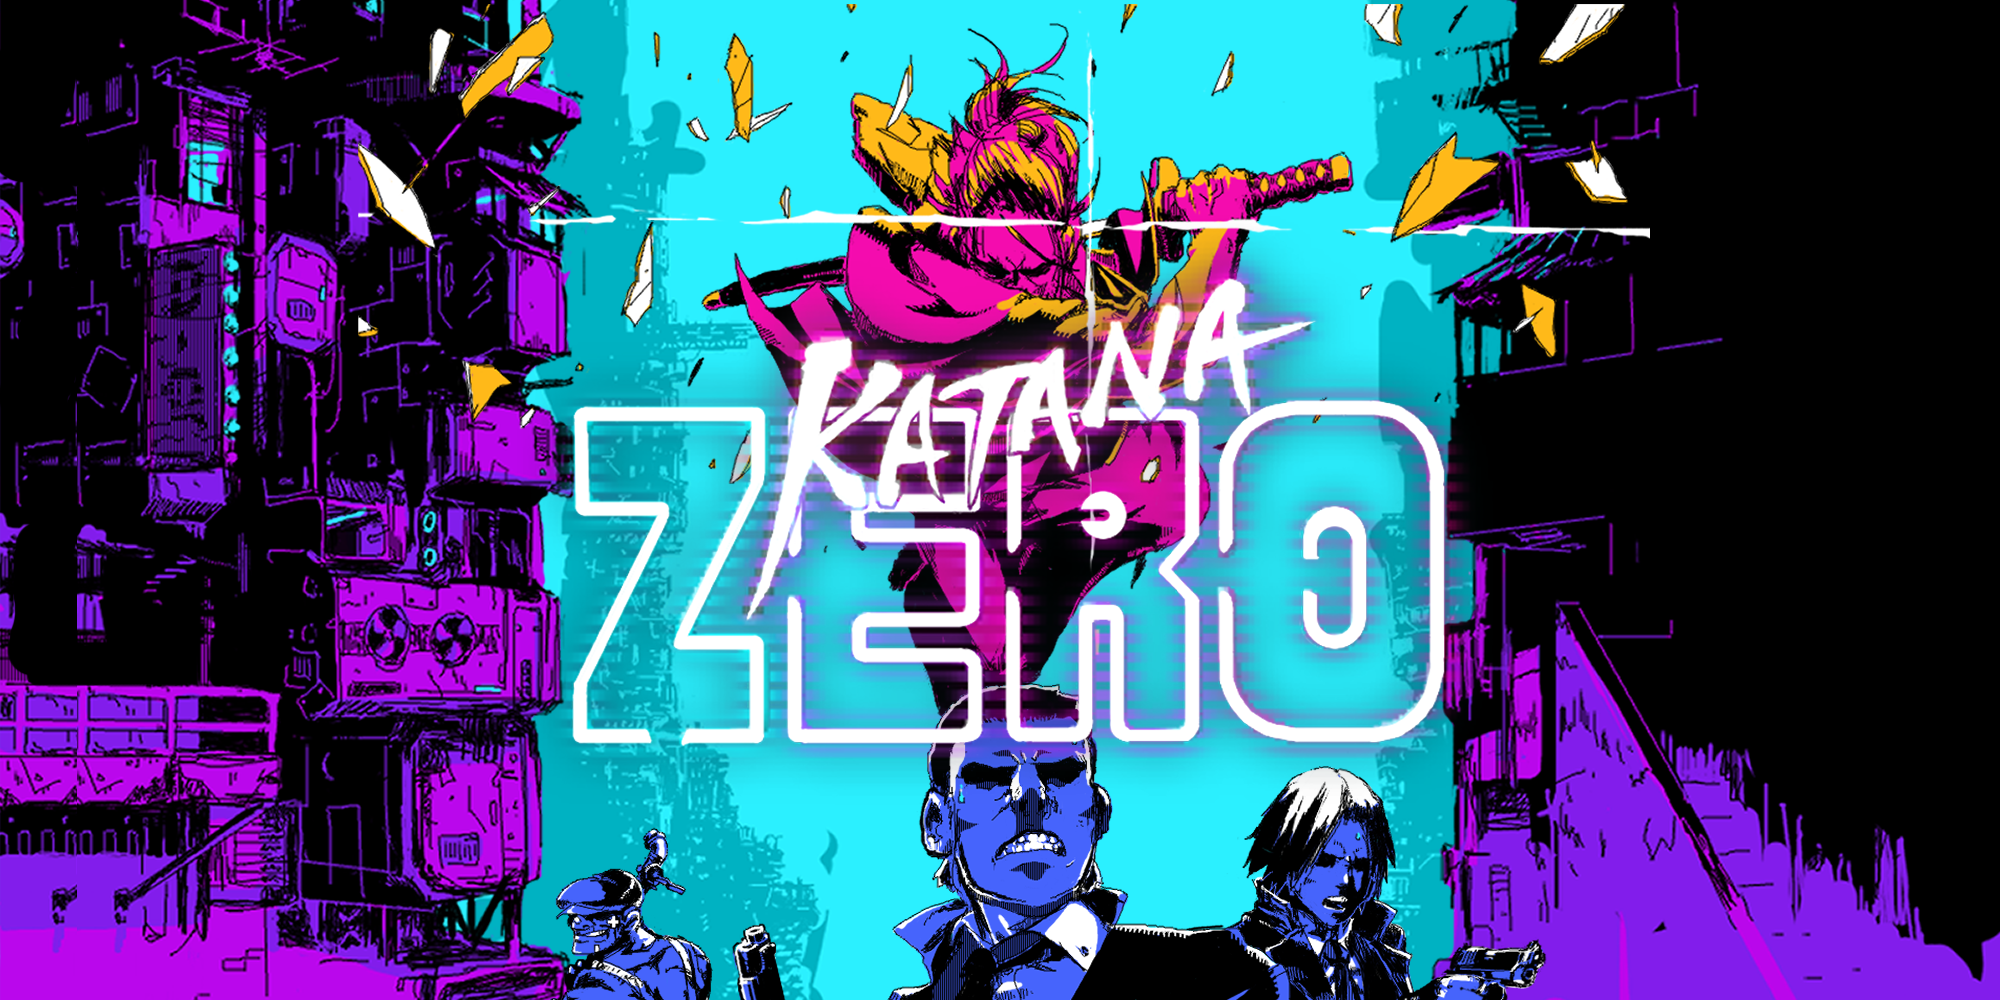 Katana ZERO artwork showing the samurai by the title